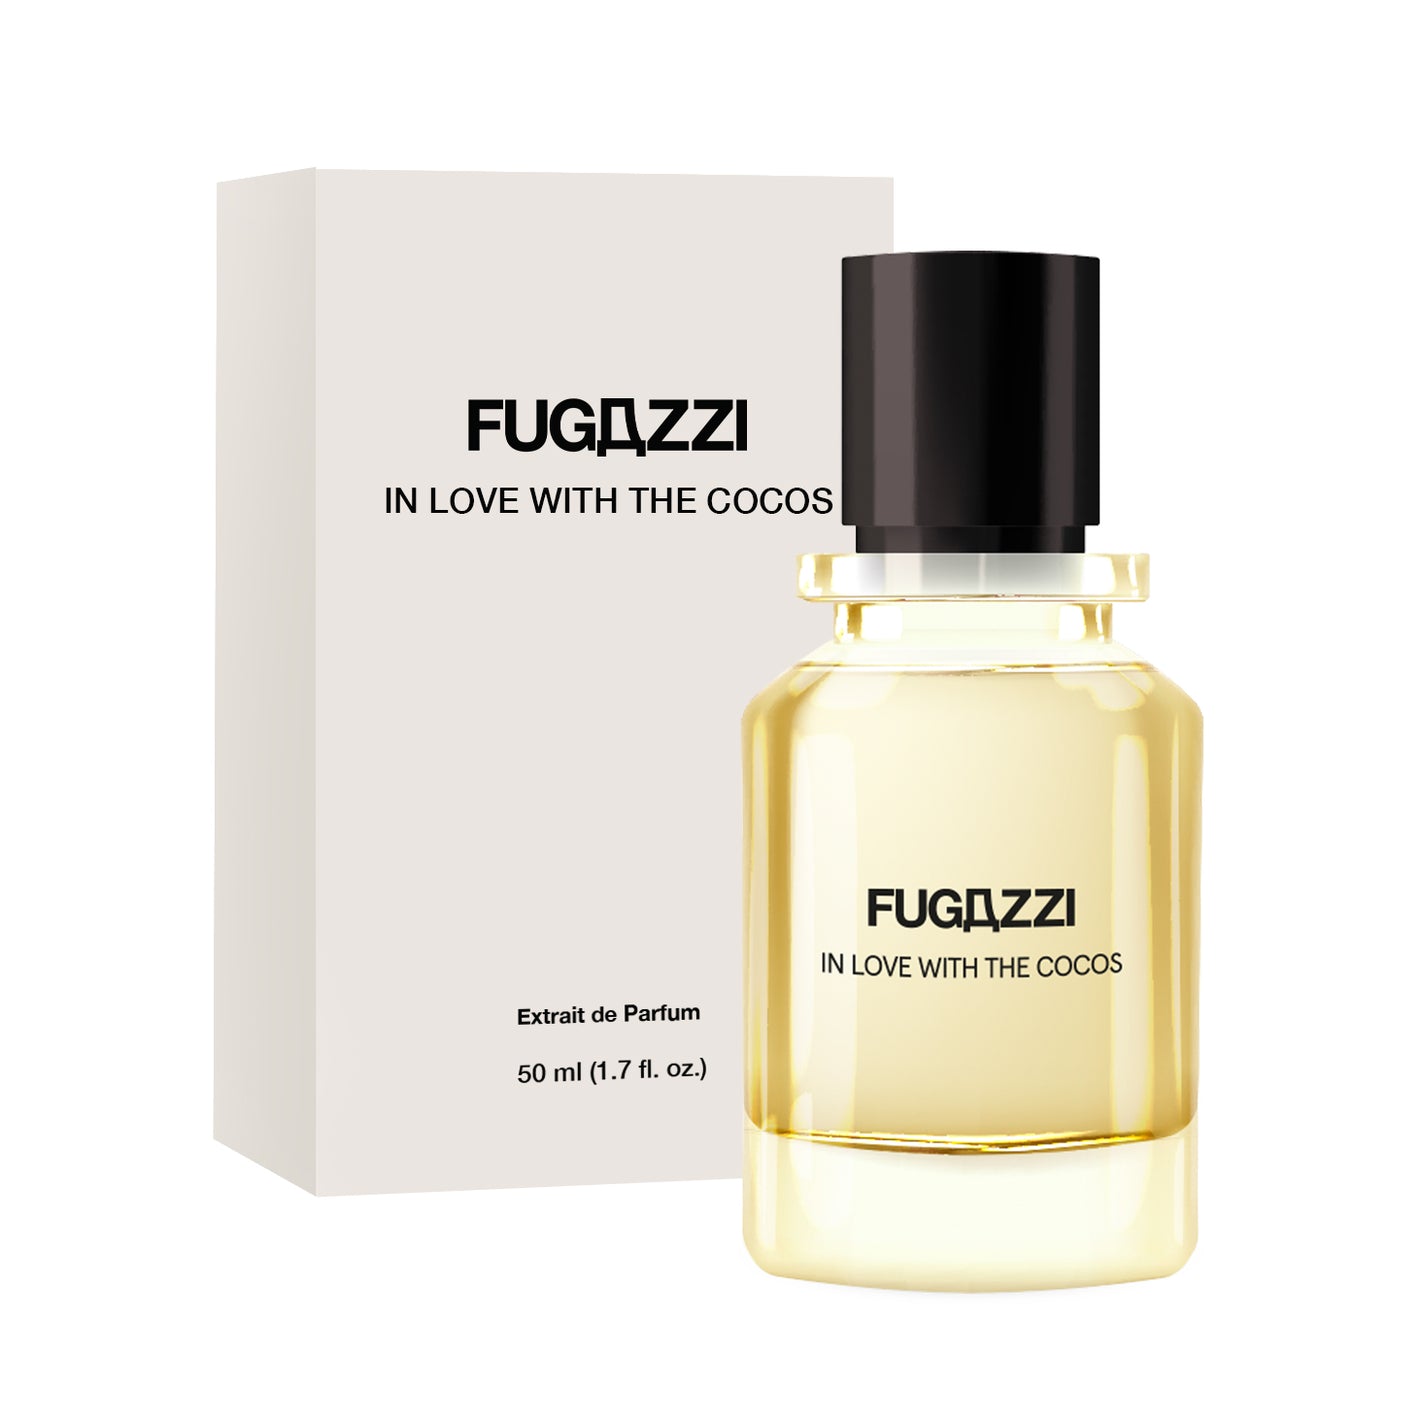 Fugazzi In Love With The Cocos Extrait de Parfum - 50ml